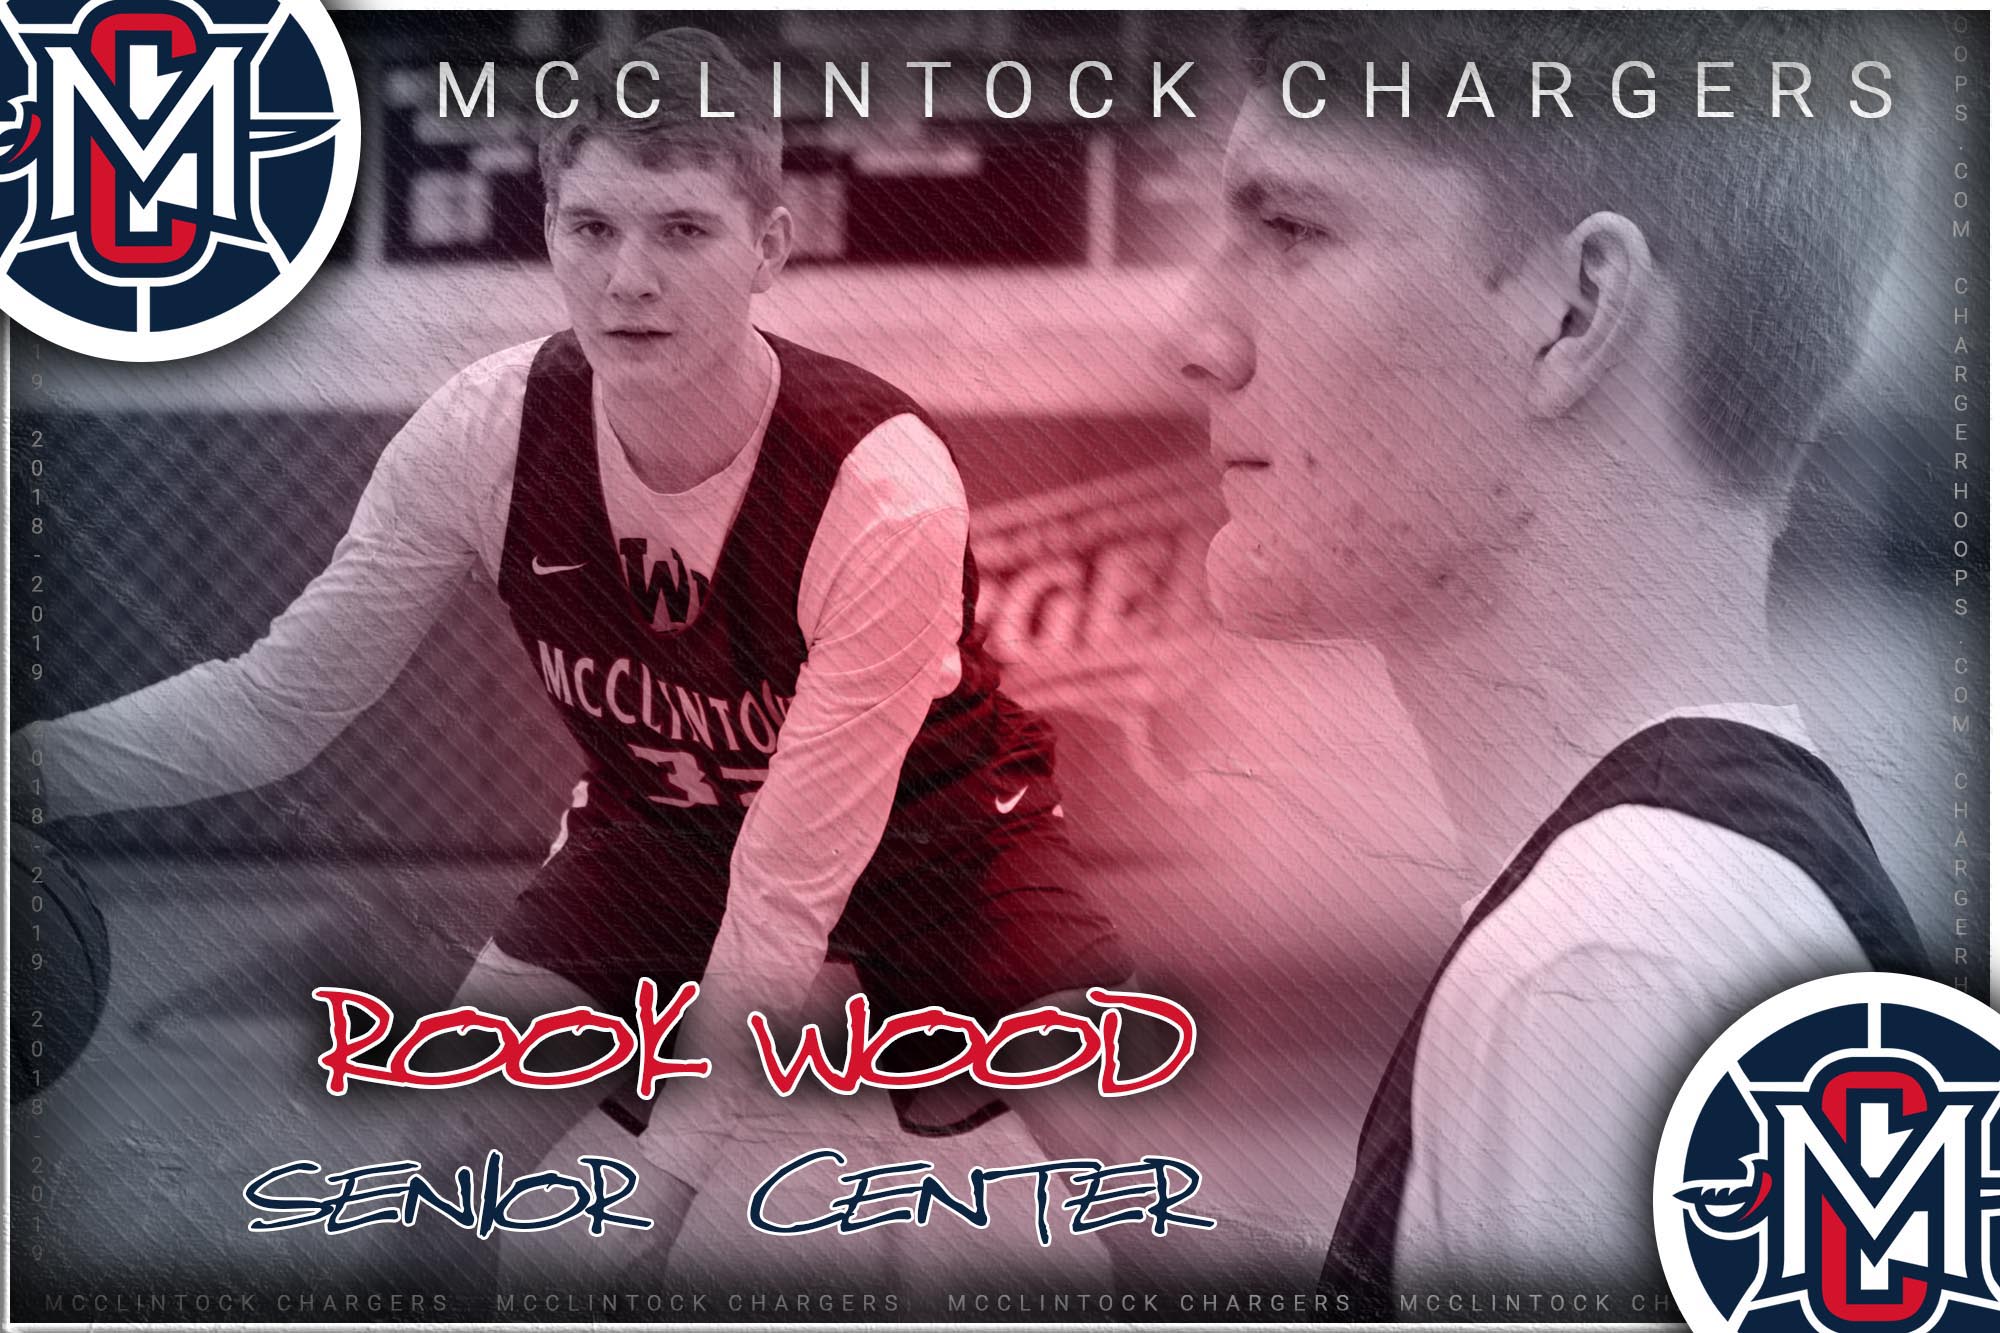 McClintock Chargers Basketball- Rook Wood